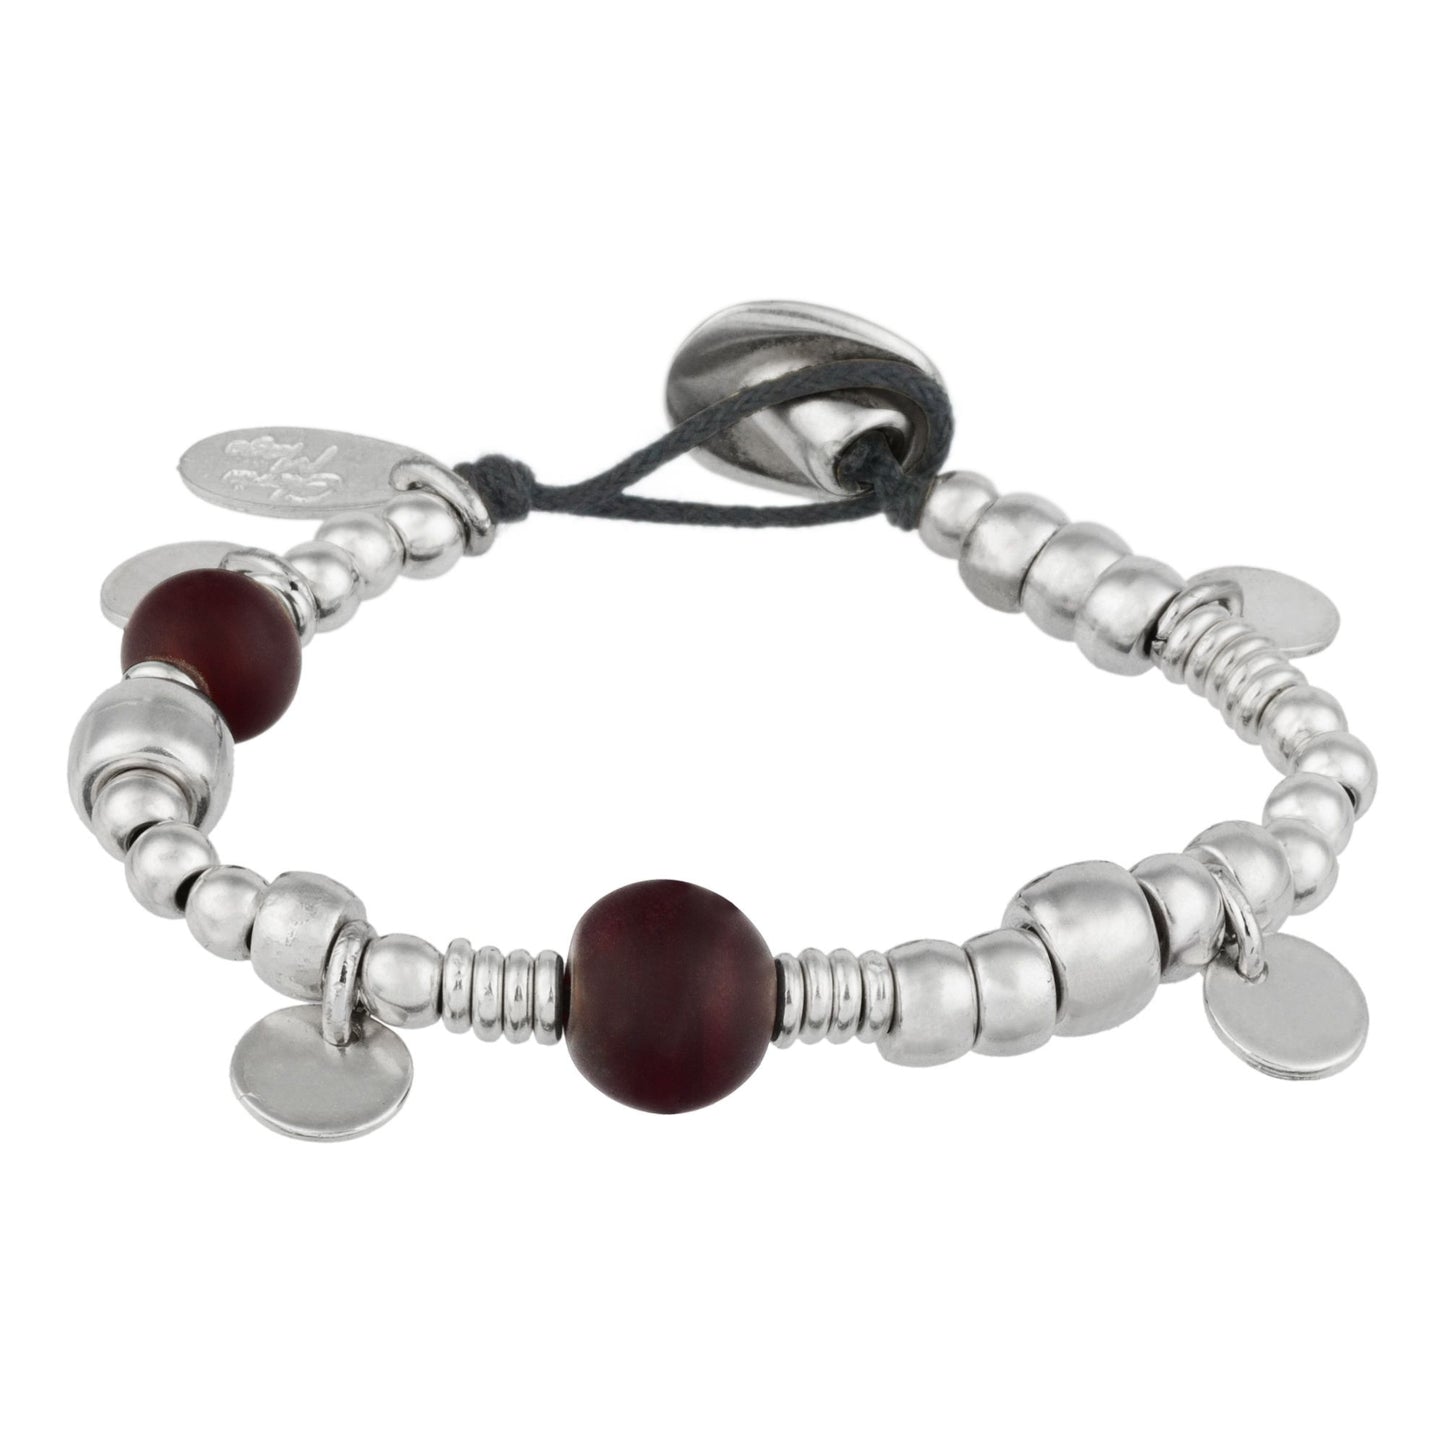 Multibead bracelet in burgundy silver